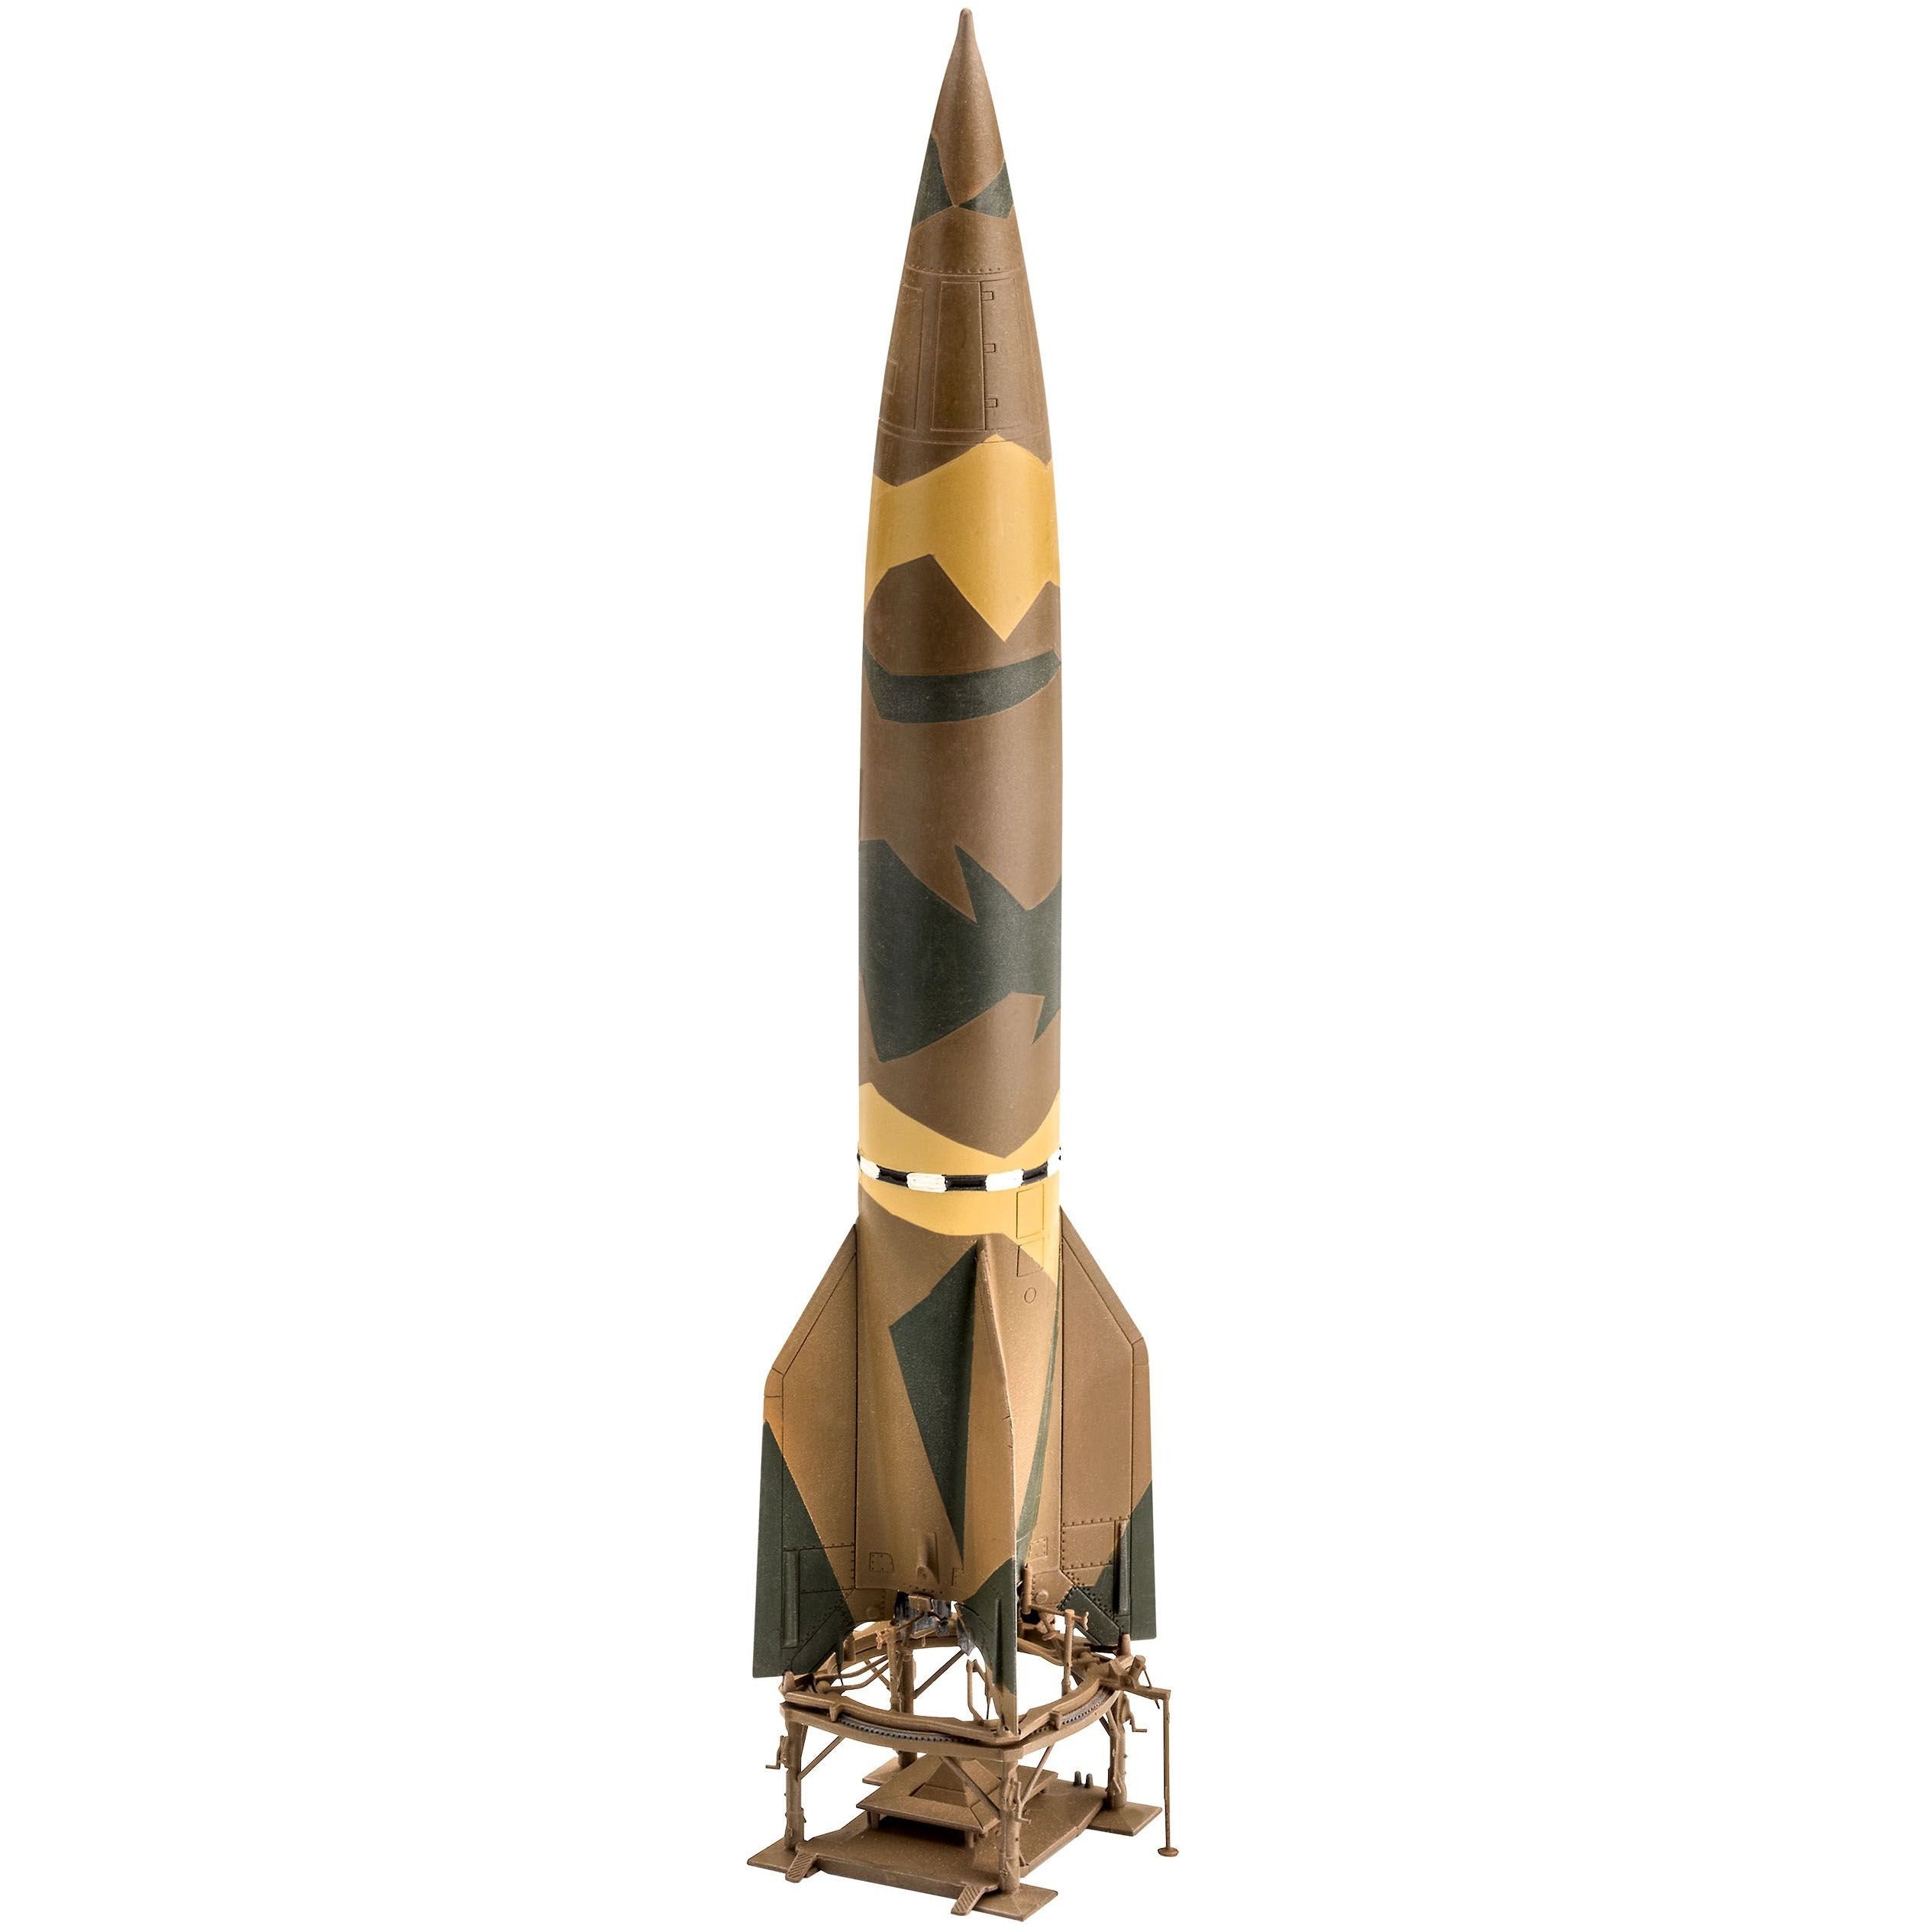 German A4/V2 Rocket 1/72 #03309 by Revell